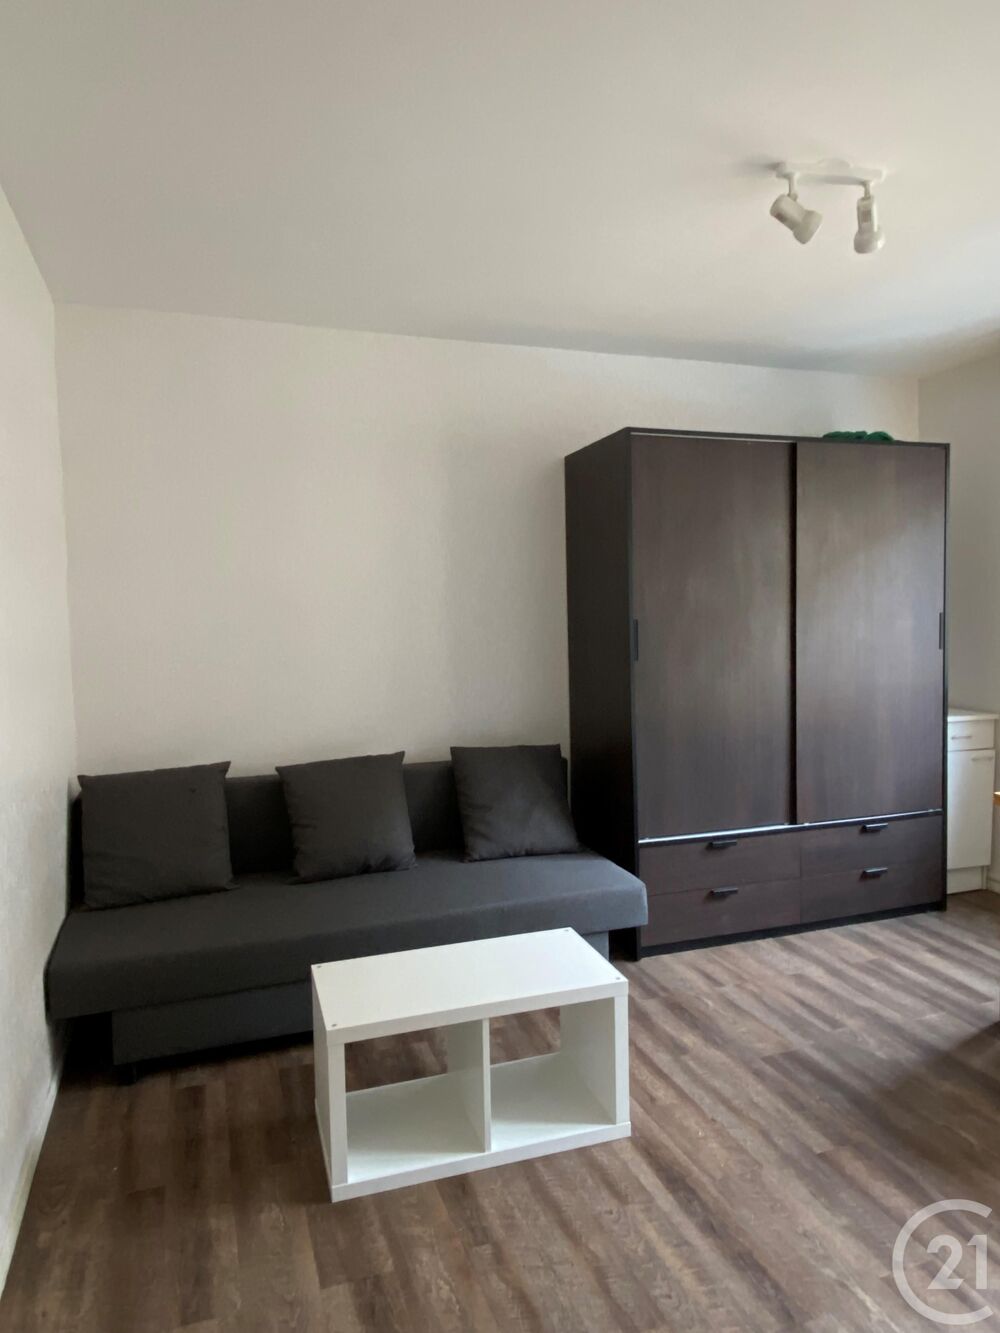 location Appartement - 1 pice(s) - 20 m Metz (57000)